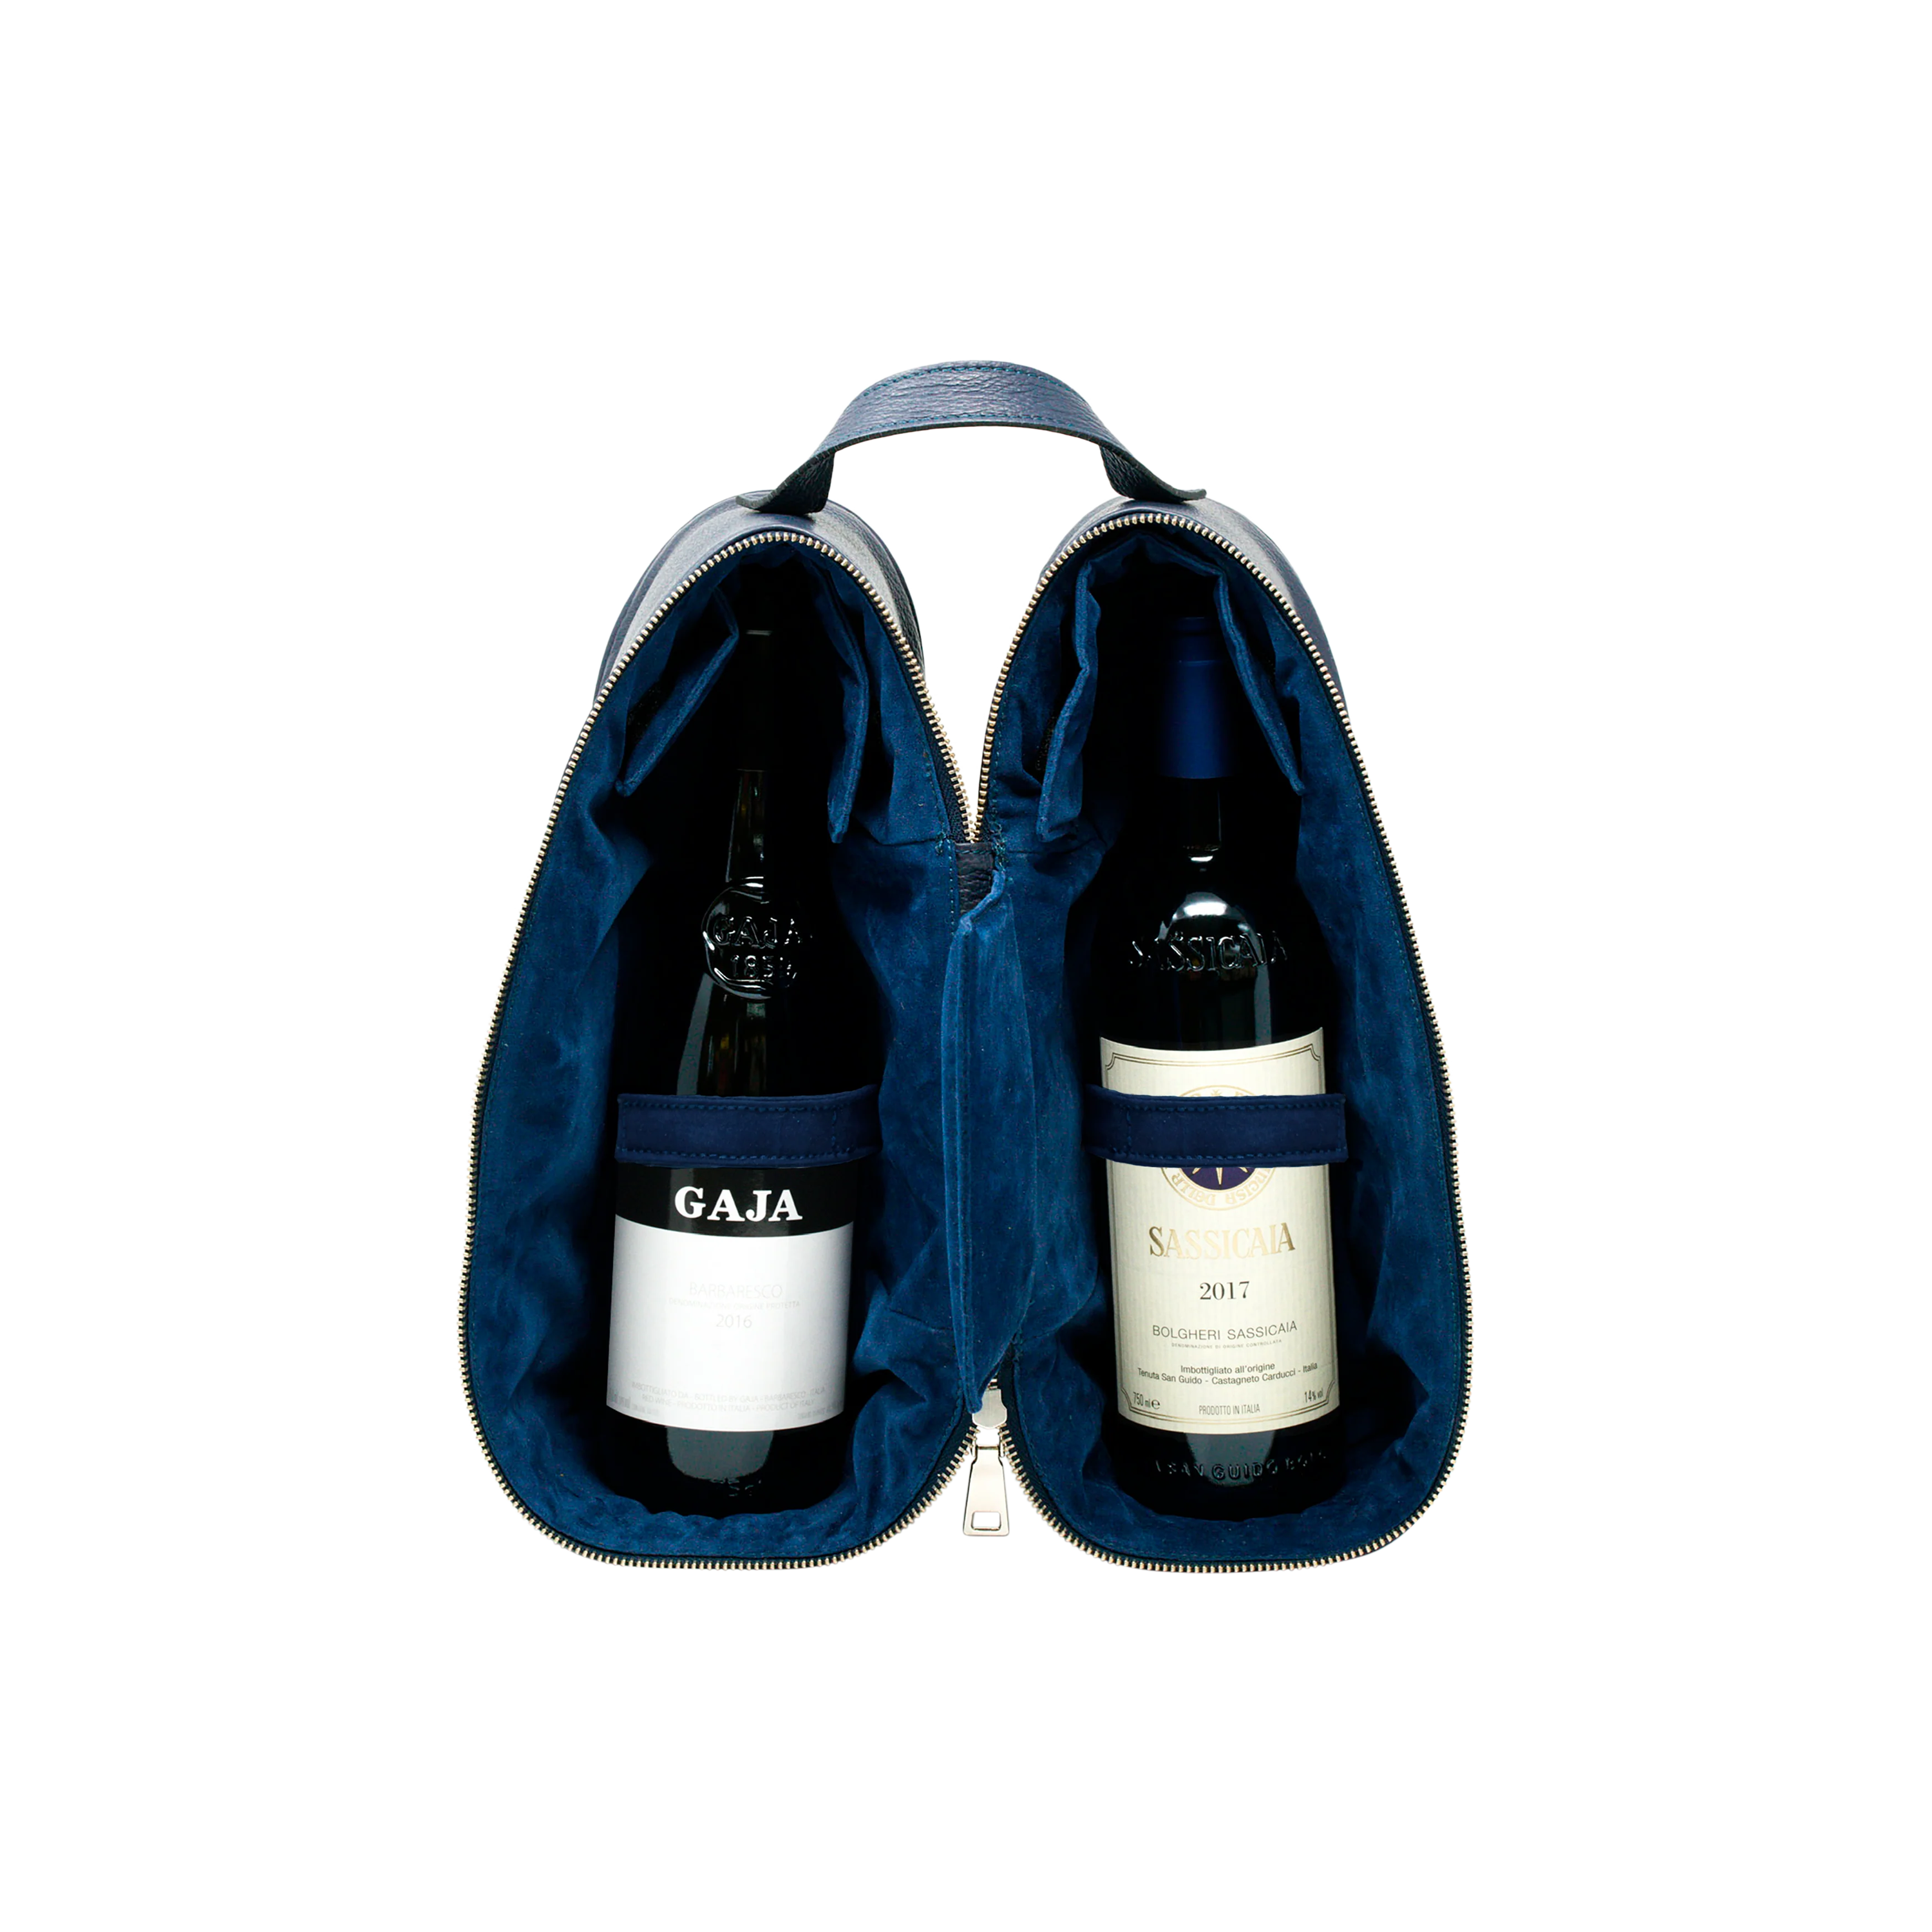 vuitton wine bottle carrier